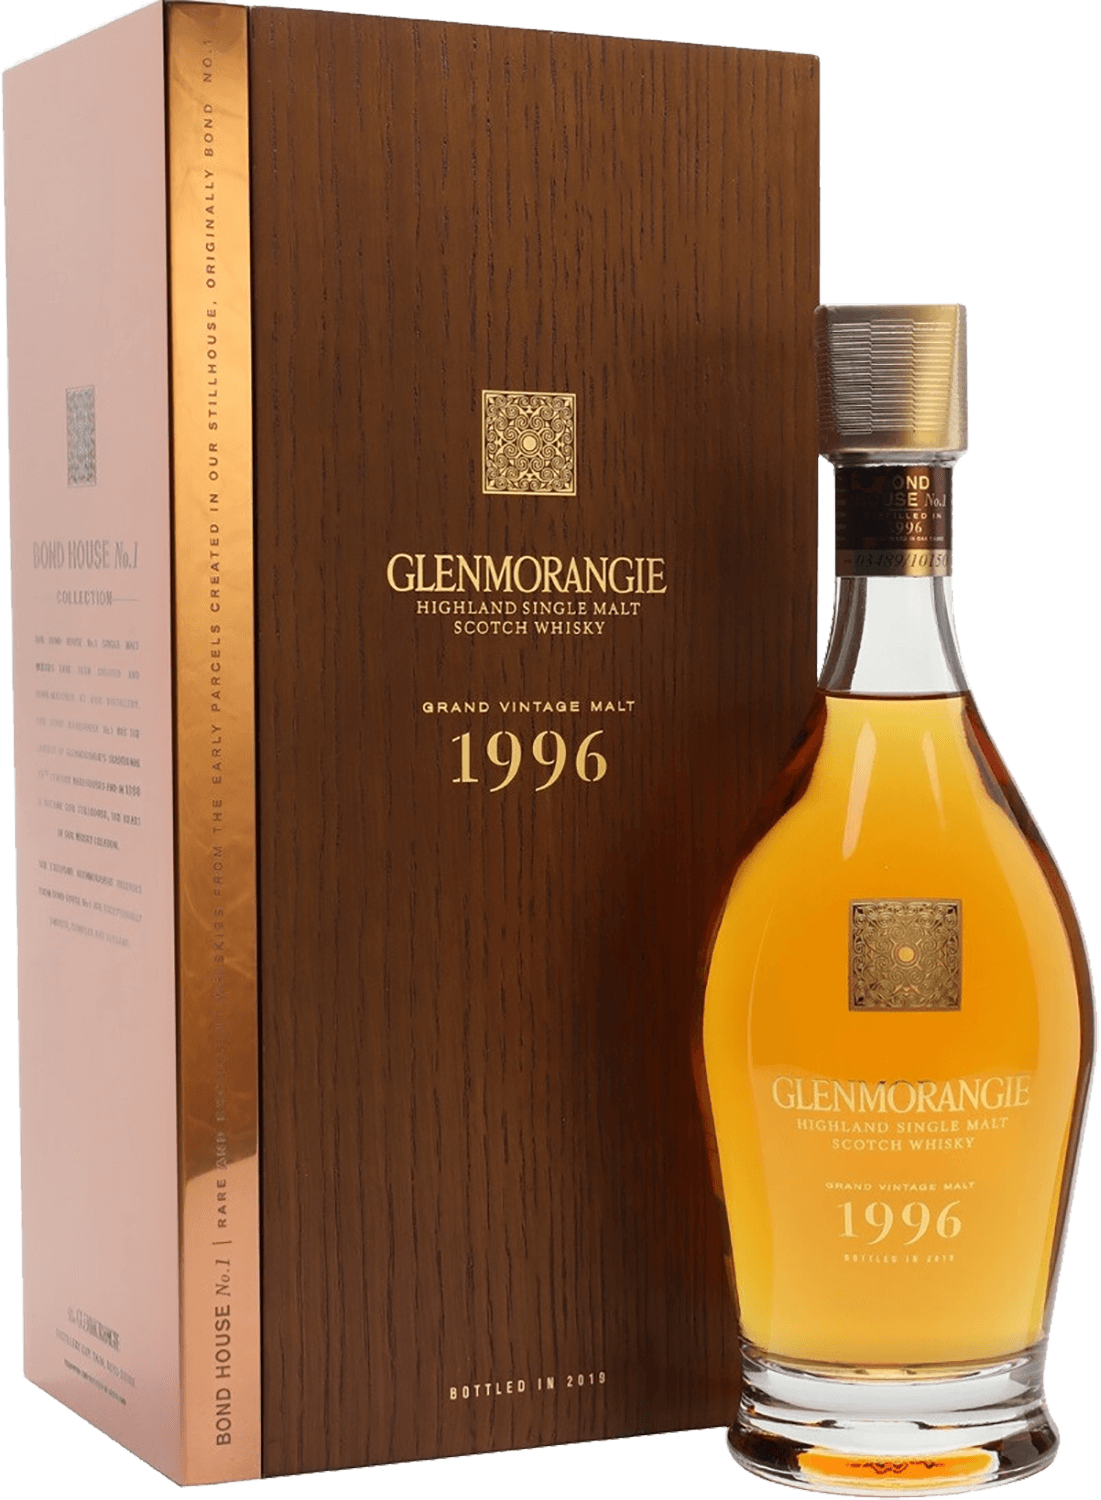 Glenmorangie Grand Vintage Malt Highland Single Malt Scotch Whisky (gift box) highland park 30 y o single malt scotch whisky gift box